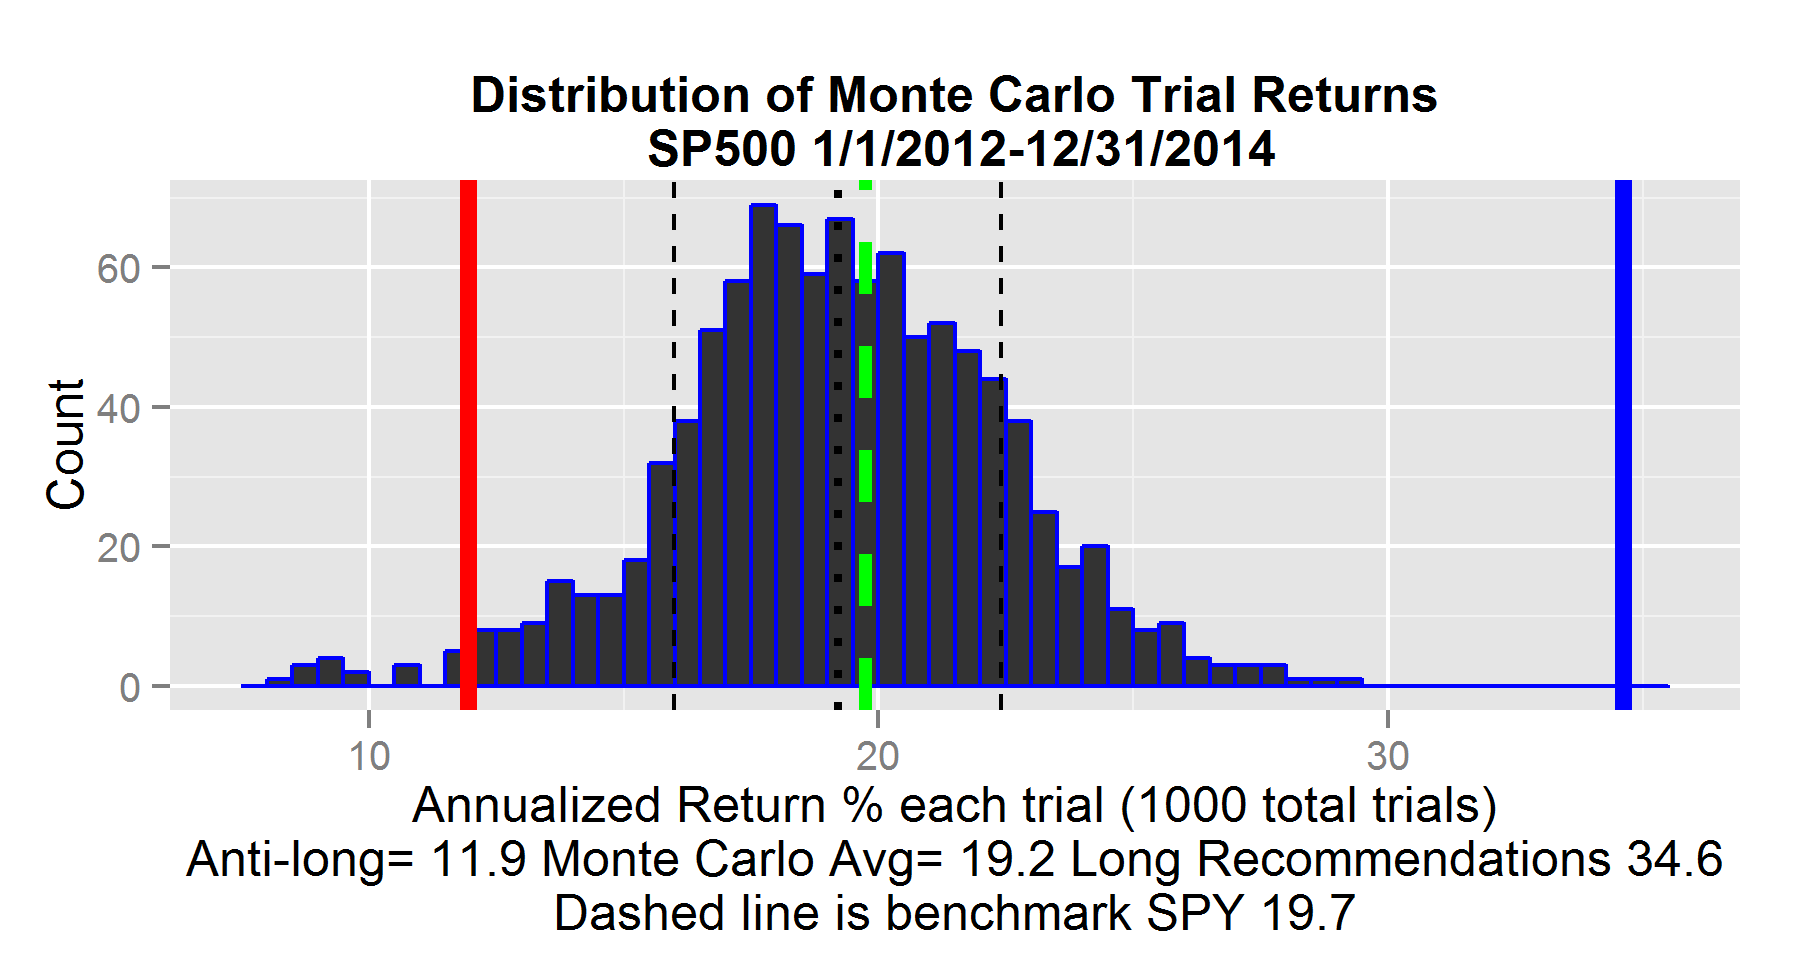 SP500 Monte Carlo simulation